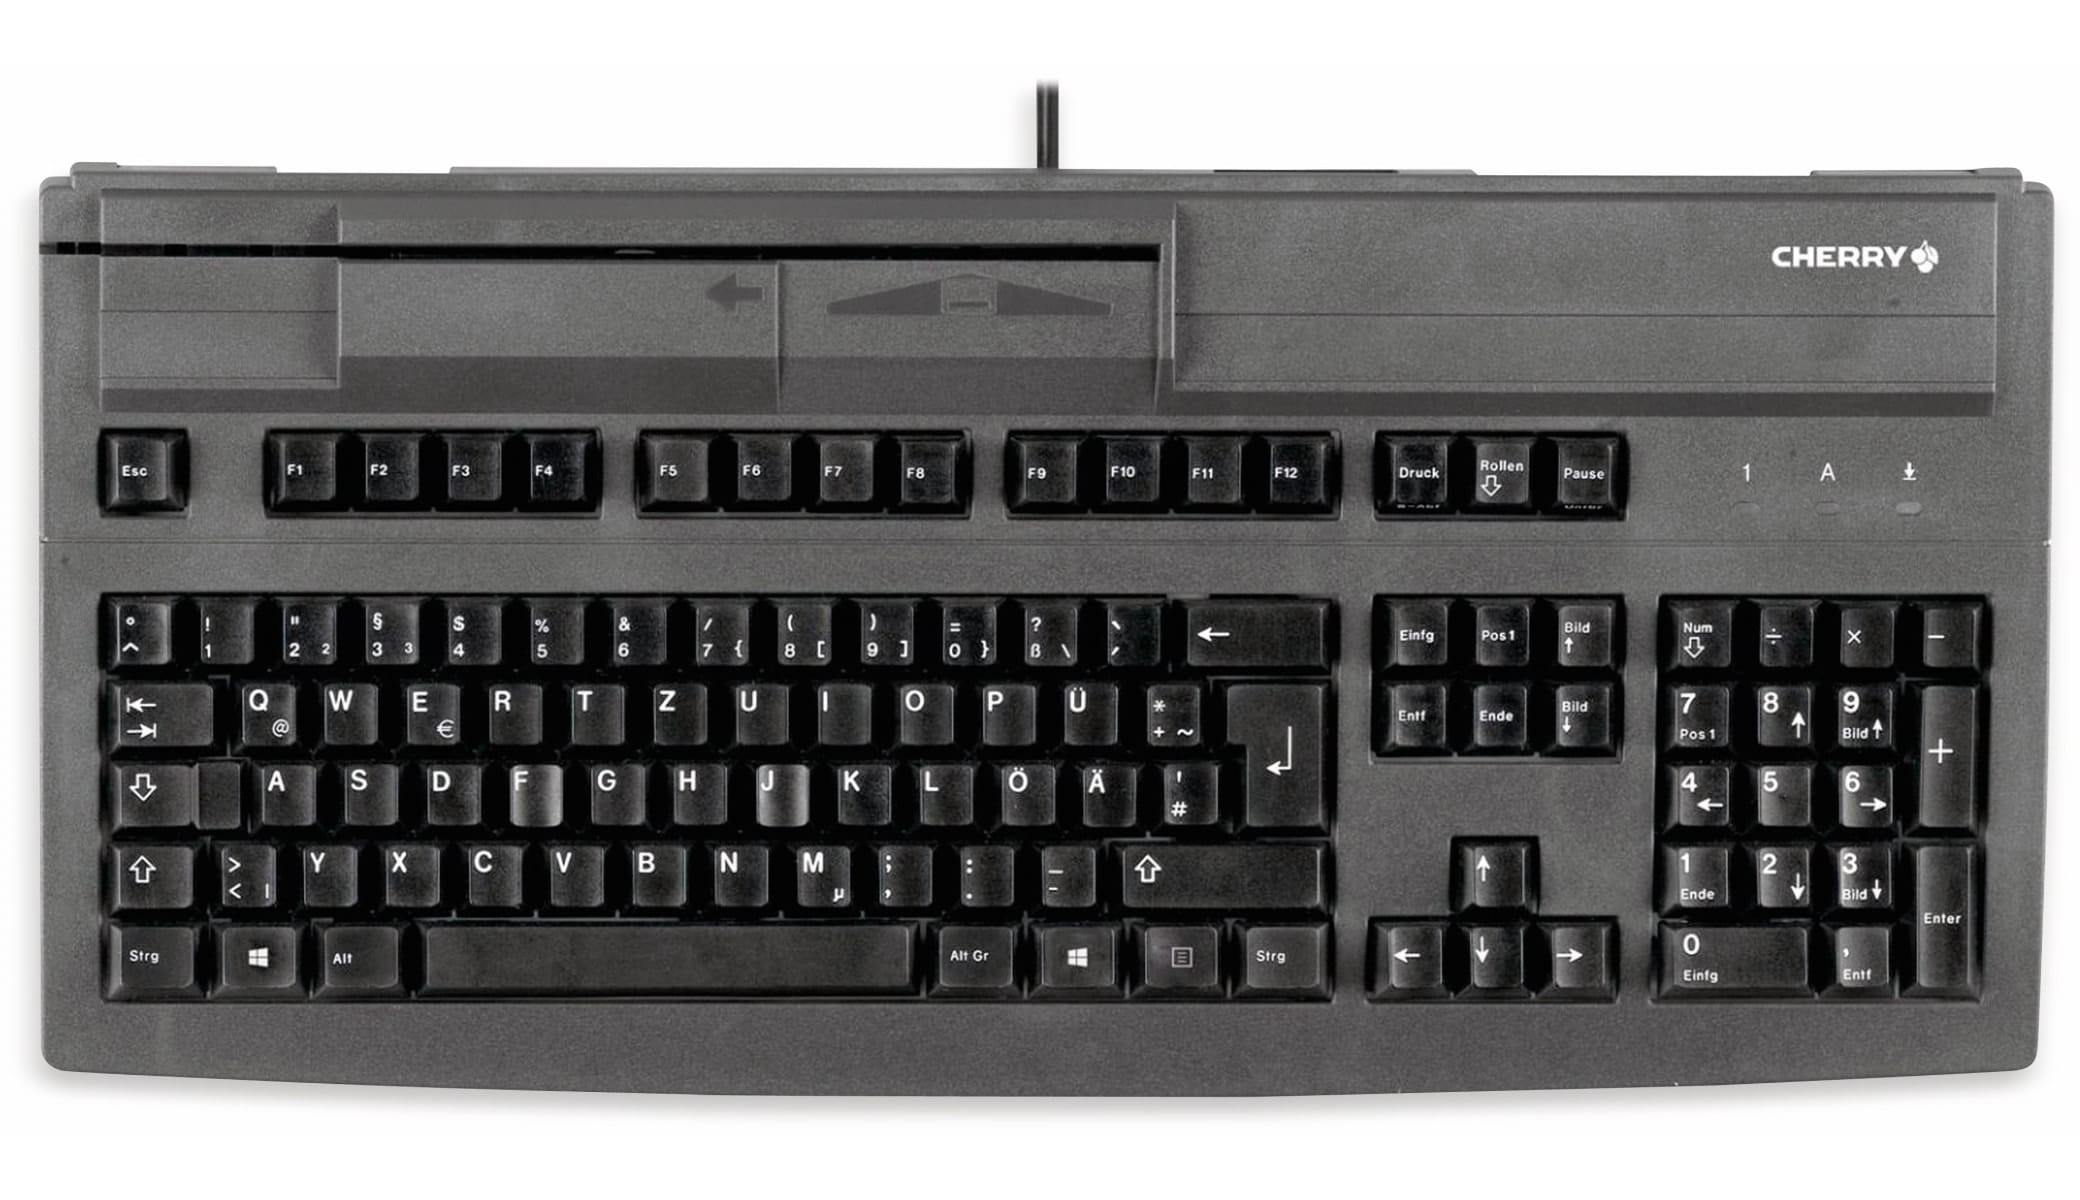 CHERRY USB-Tastatur MX V2 G80-8000 Multiboard, mechanisch, schwarz